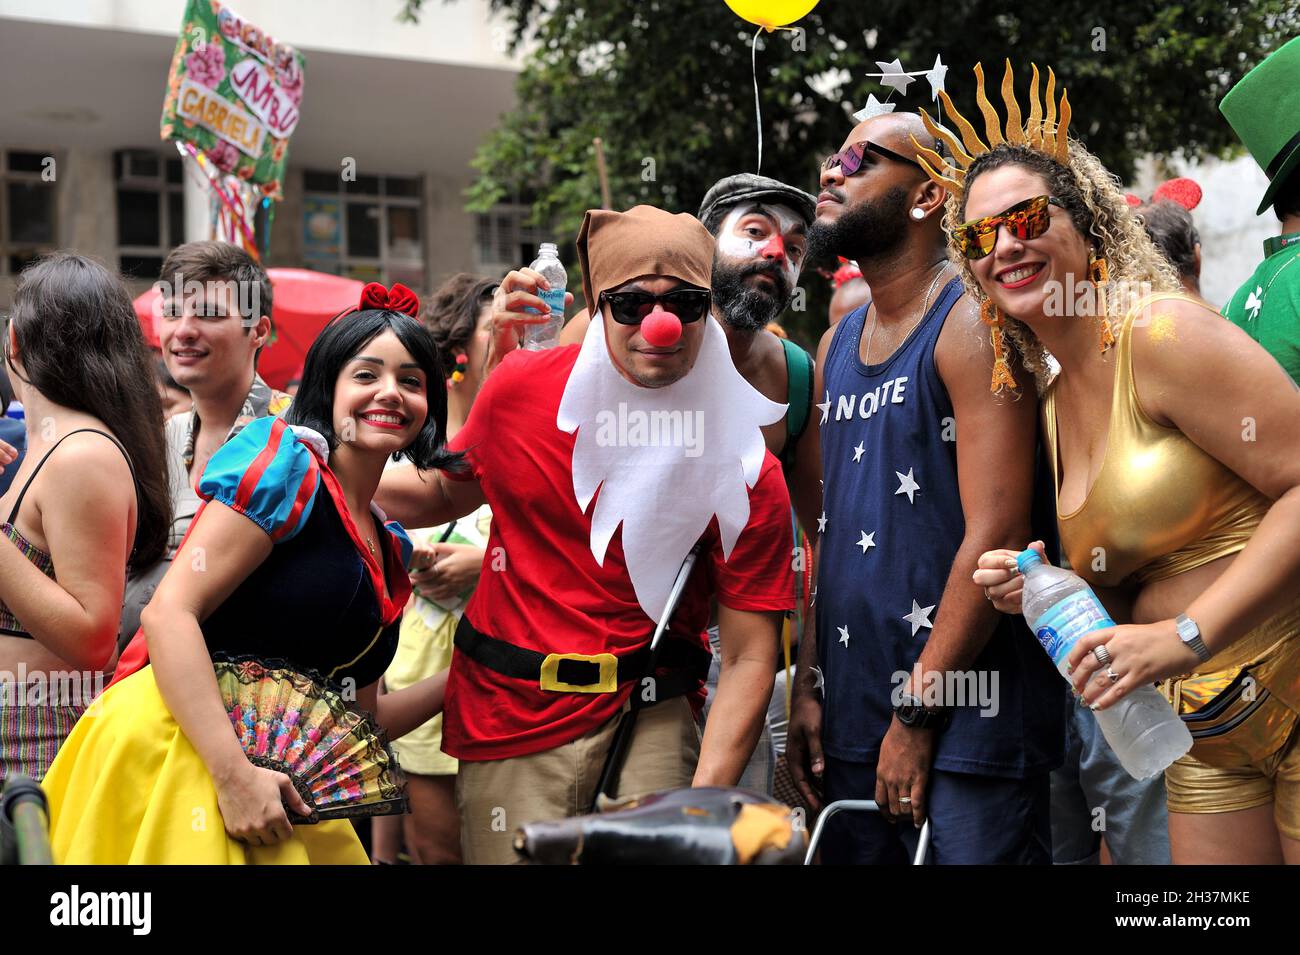 Brazil - February 22, 2020: Disguised revelers celebrate life at the last carnival in Rio de Janeiro held before coronavirus pandemic confinement. Stock Photo